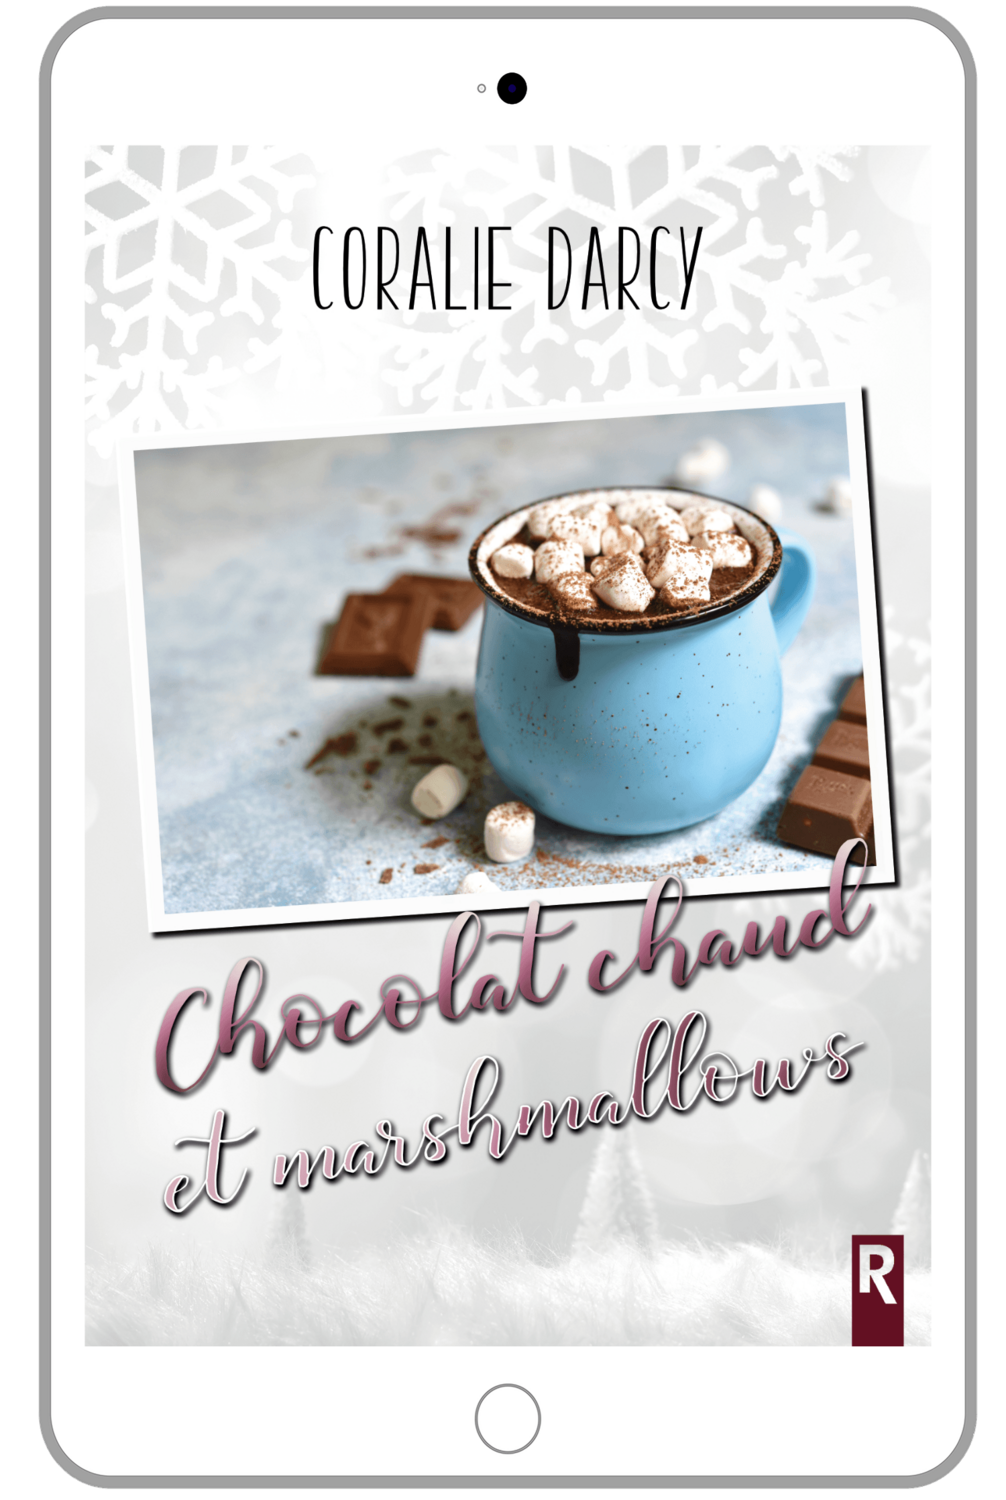 Chocolat chaud et marshmallows - Coralie DARCY